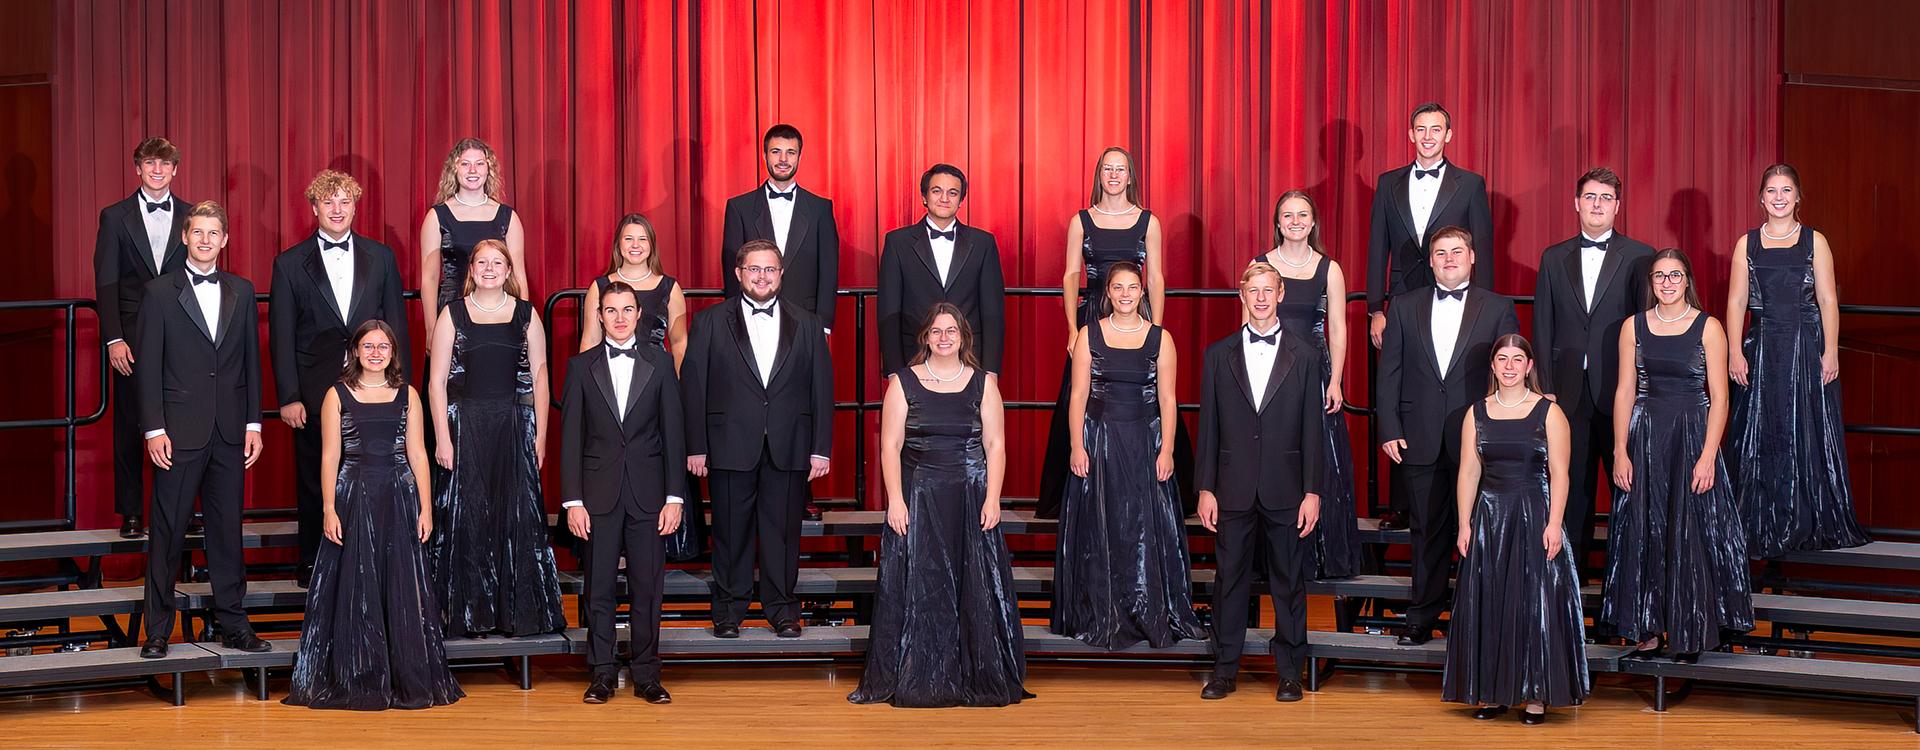 Chamber Choir group photo